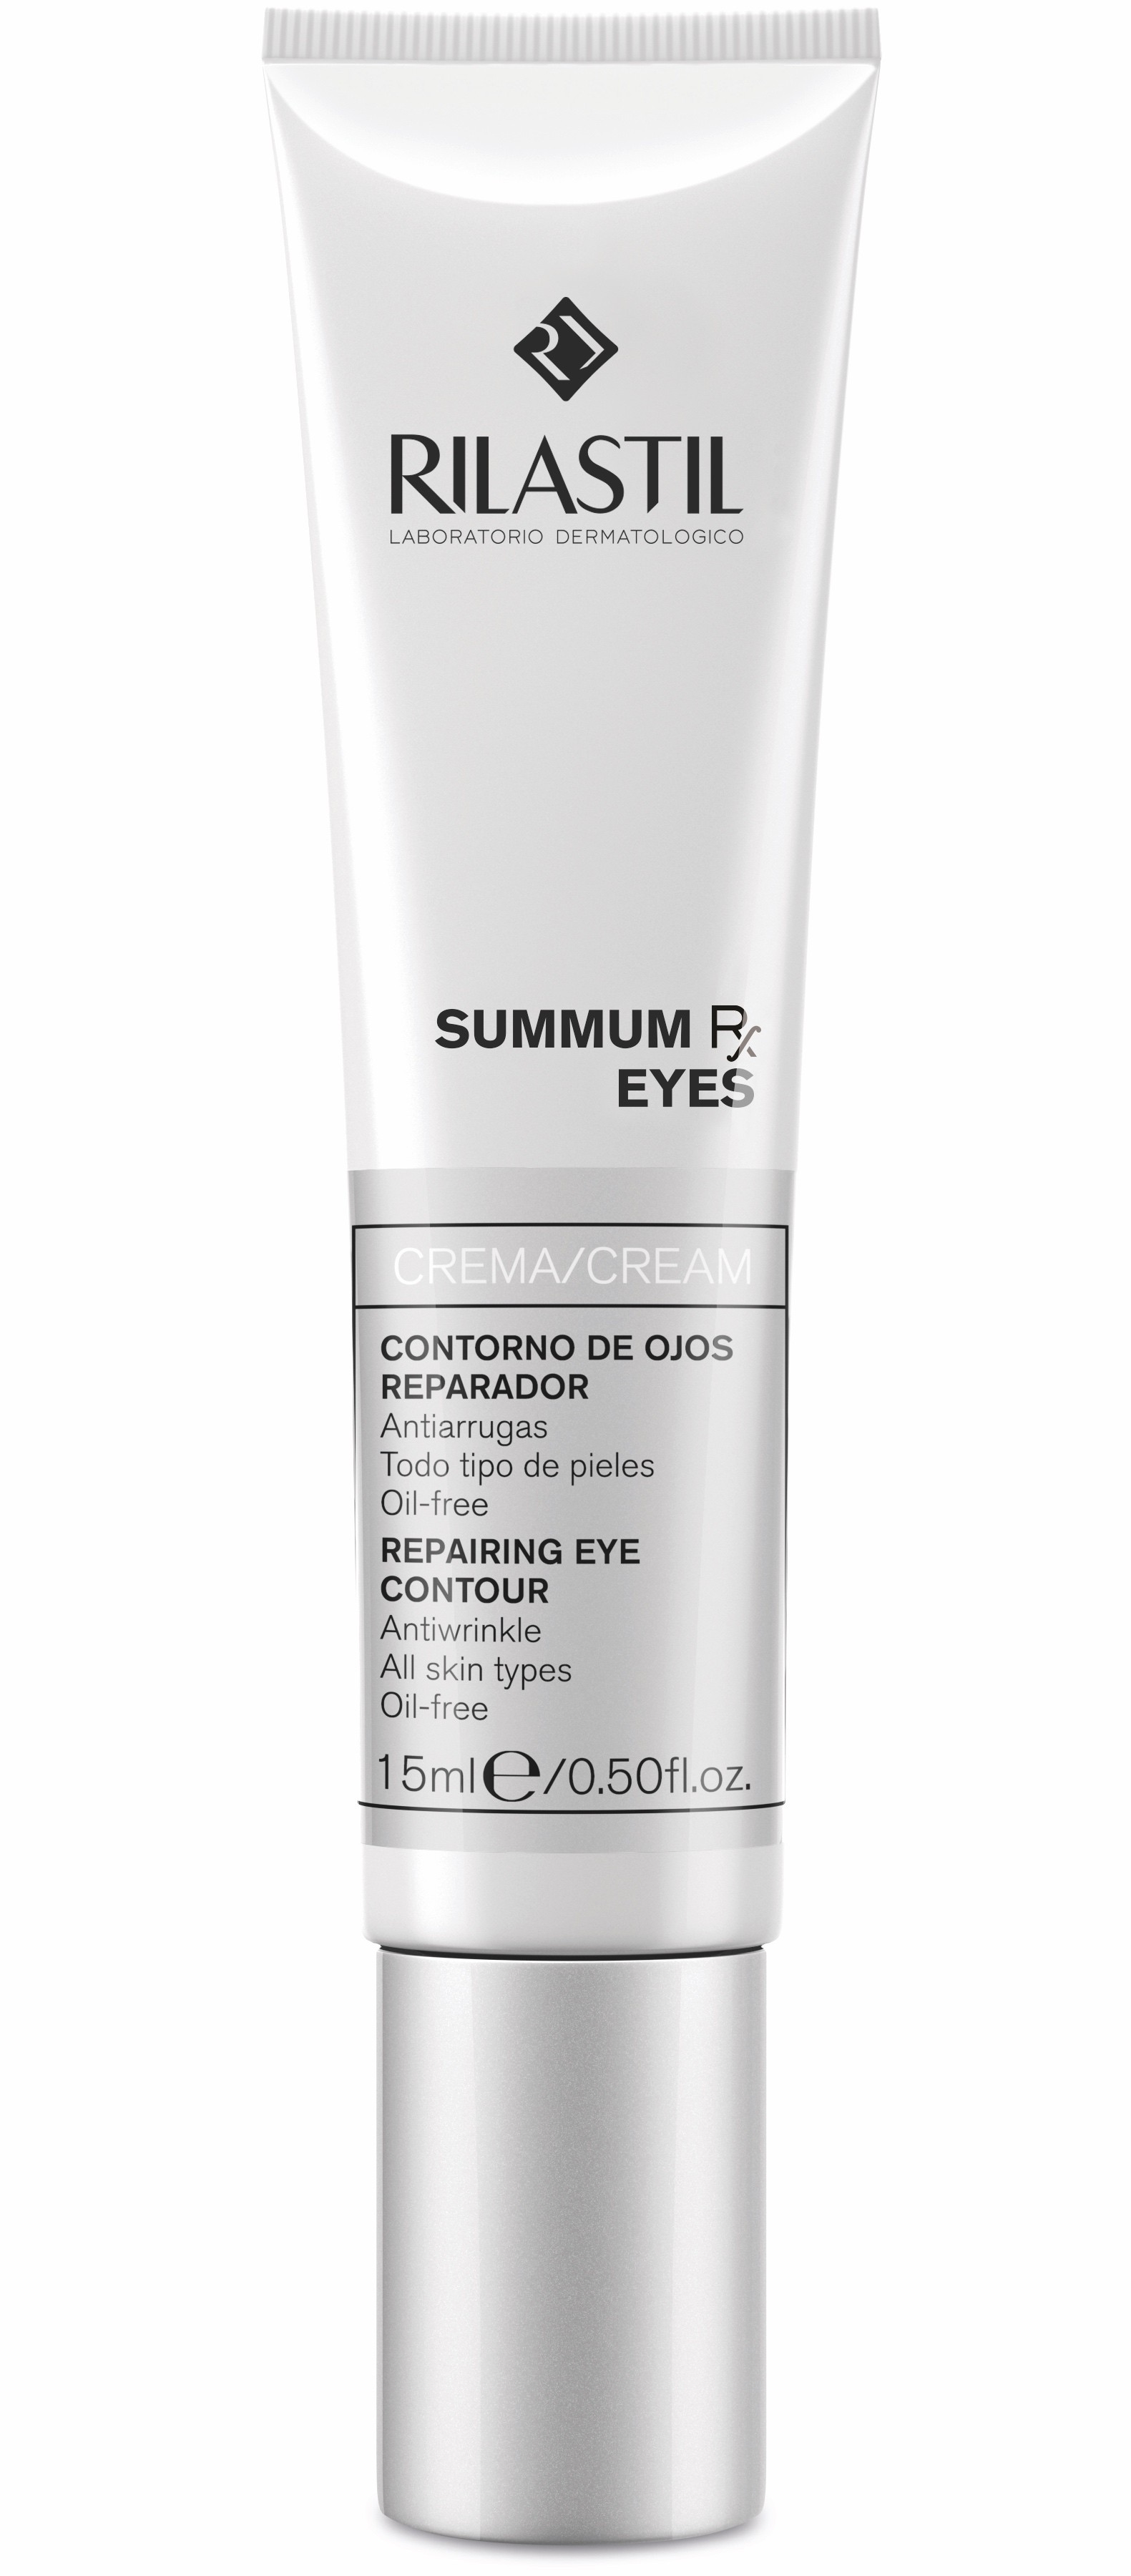 Rilastil Summum Rx Olhos Contorno Ocular Antioxidante, 15ml.